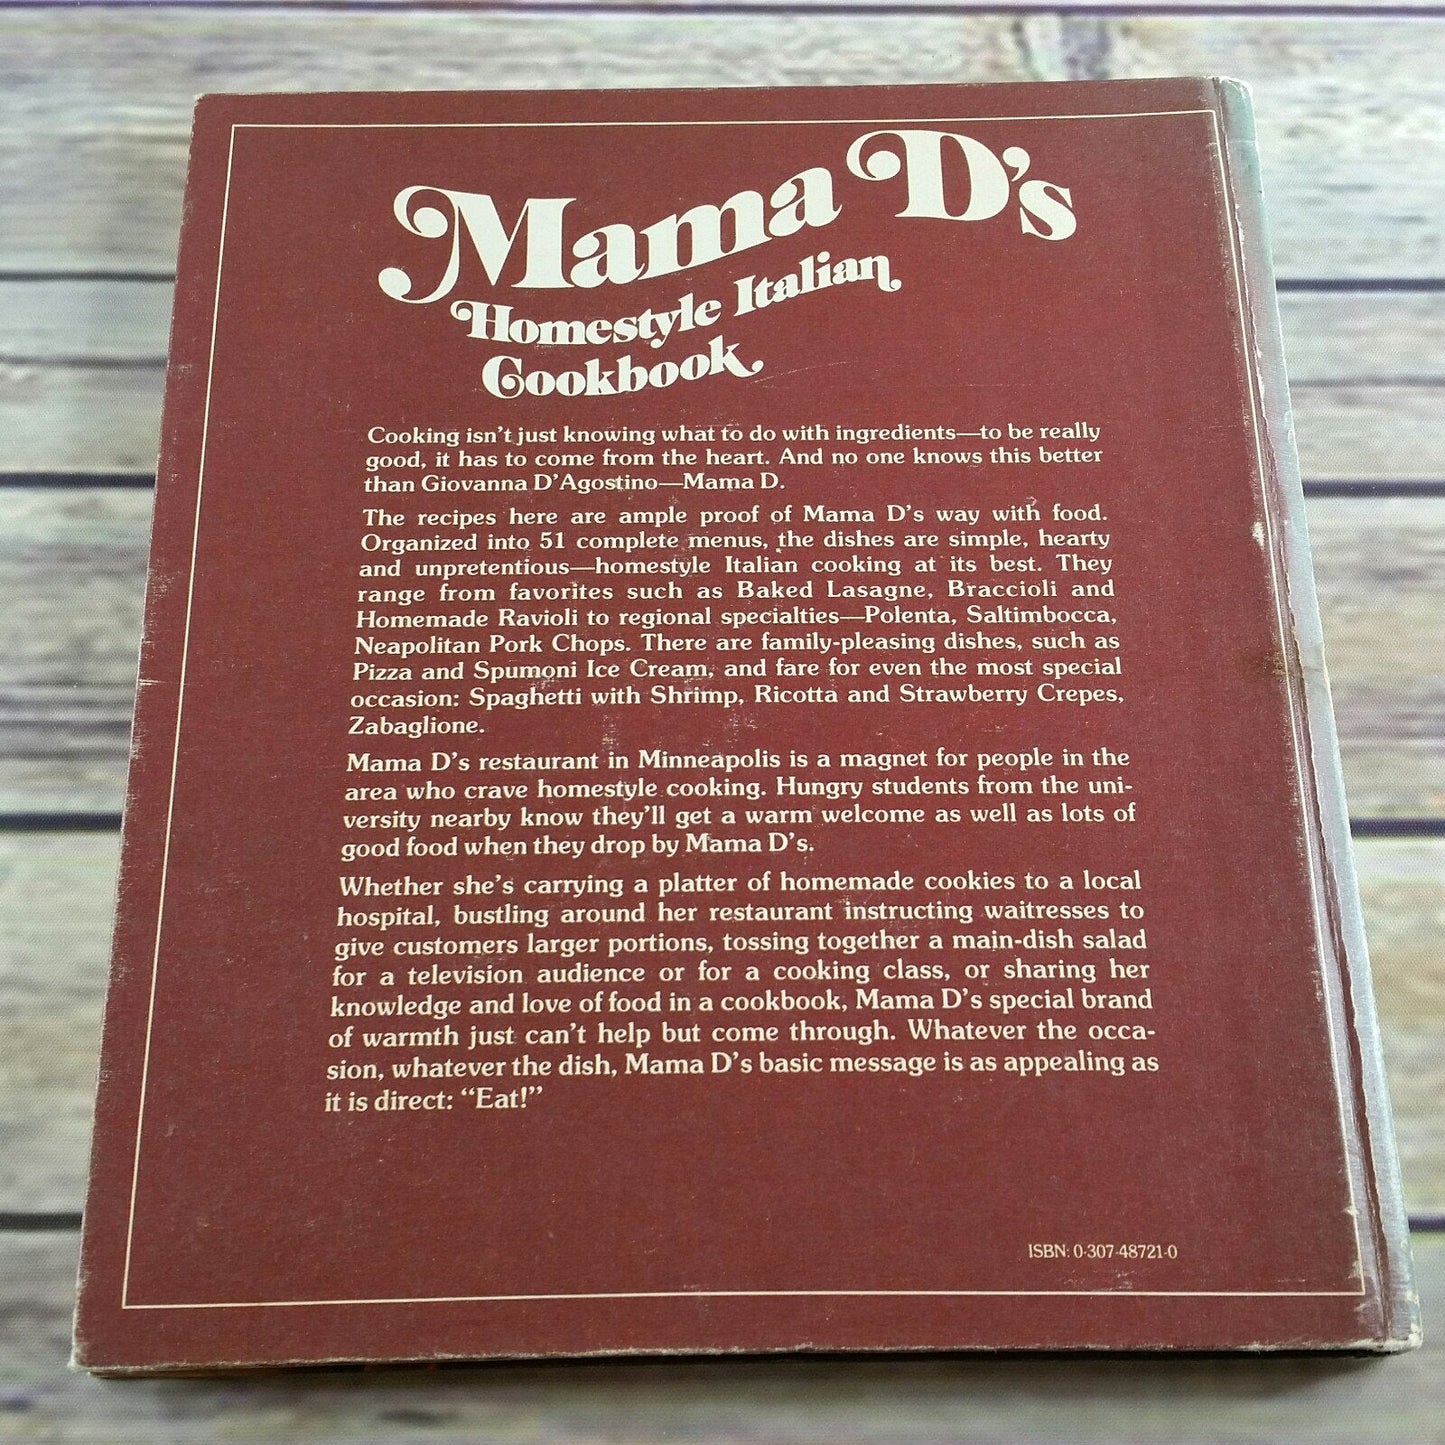 Vintage Italian Cookbook Mama Ds Homestyle Italian Recipes 1975 Hardcover No Dust Jacket Giovanna D'Agostino Golden Press